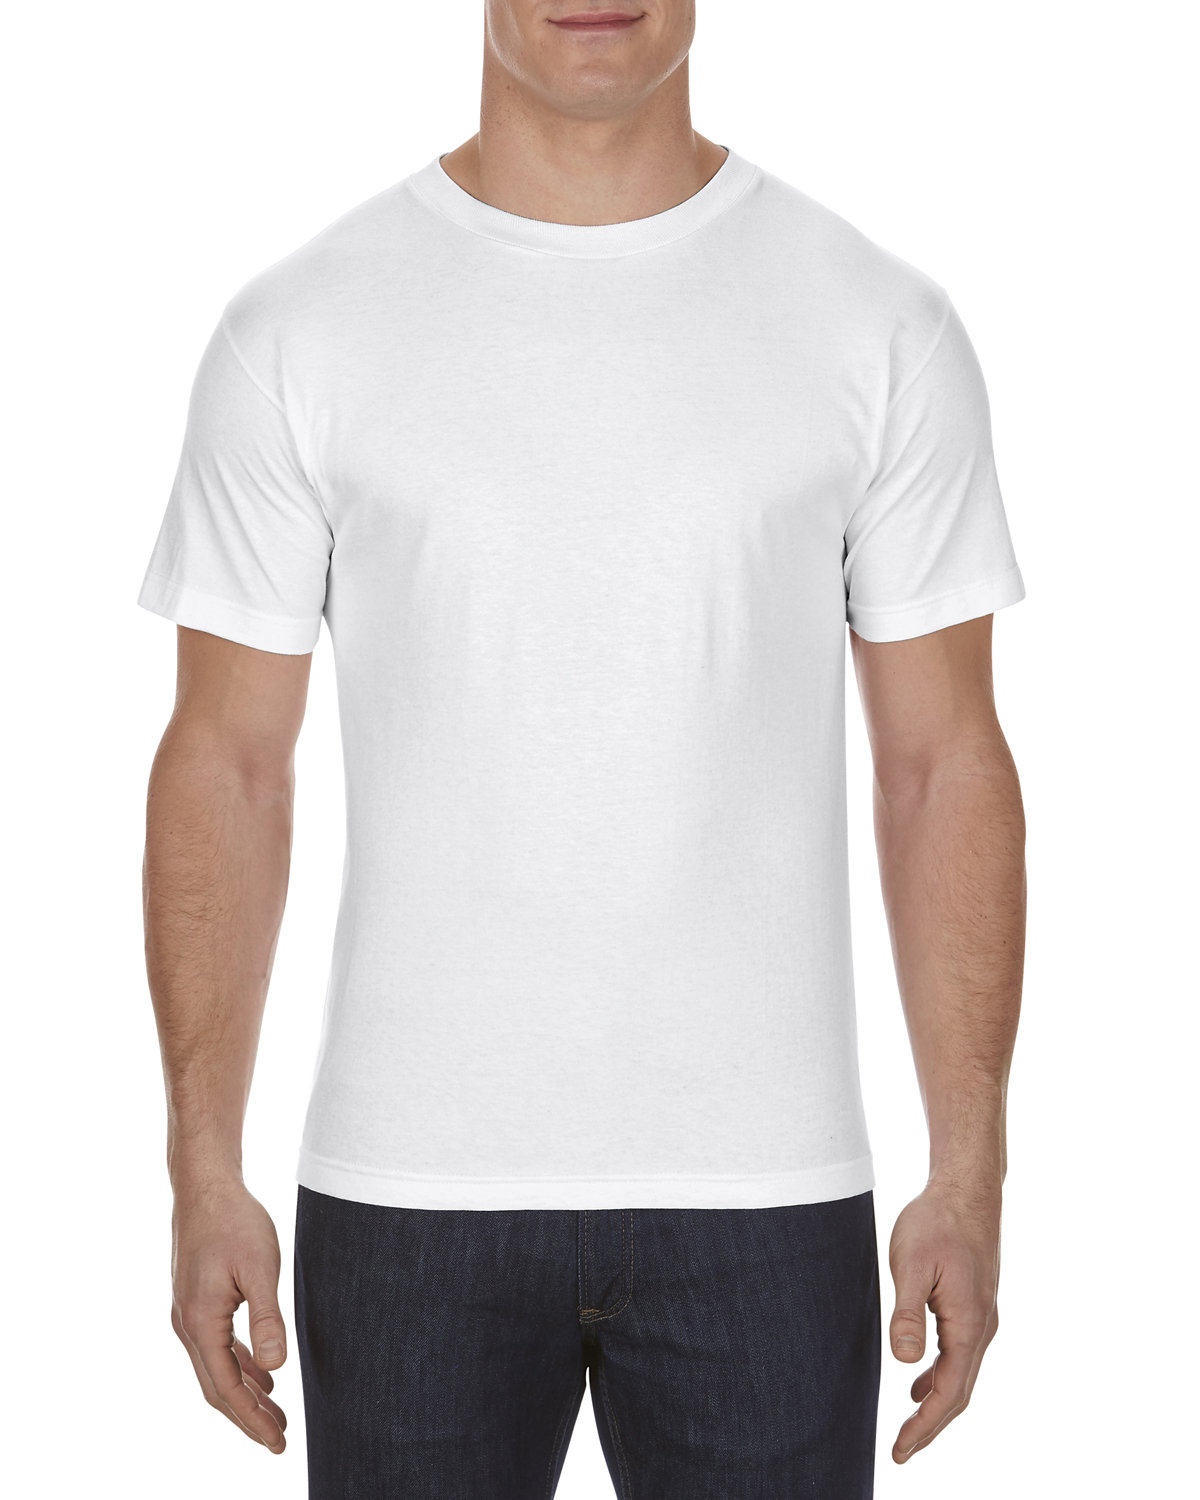 American Apparel Unisex Heavyweight Cotton T-Shirt white 